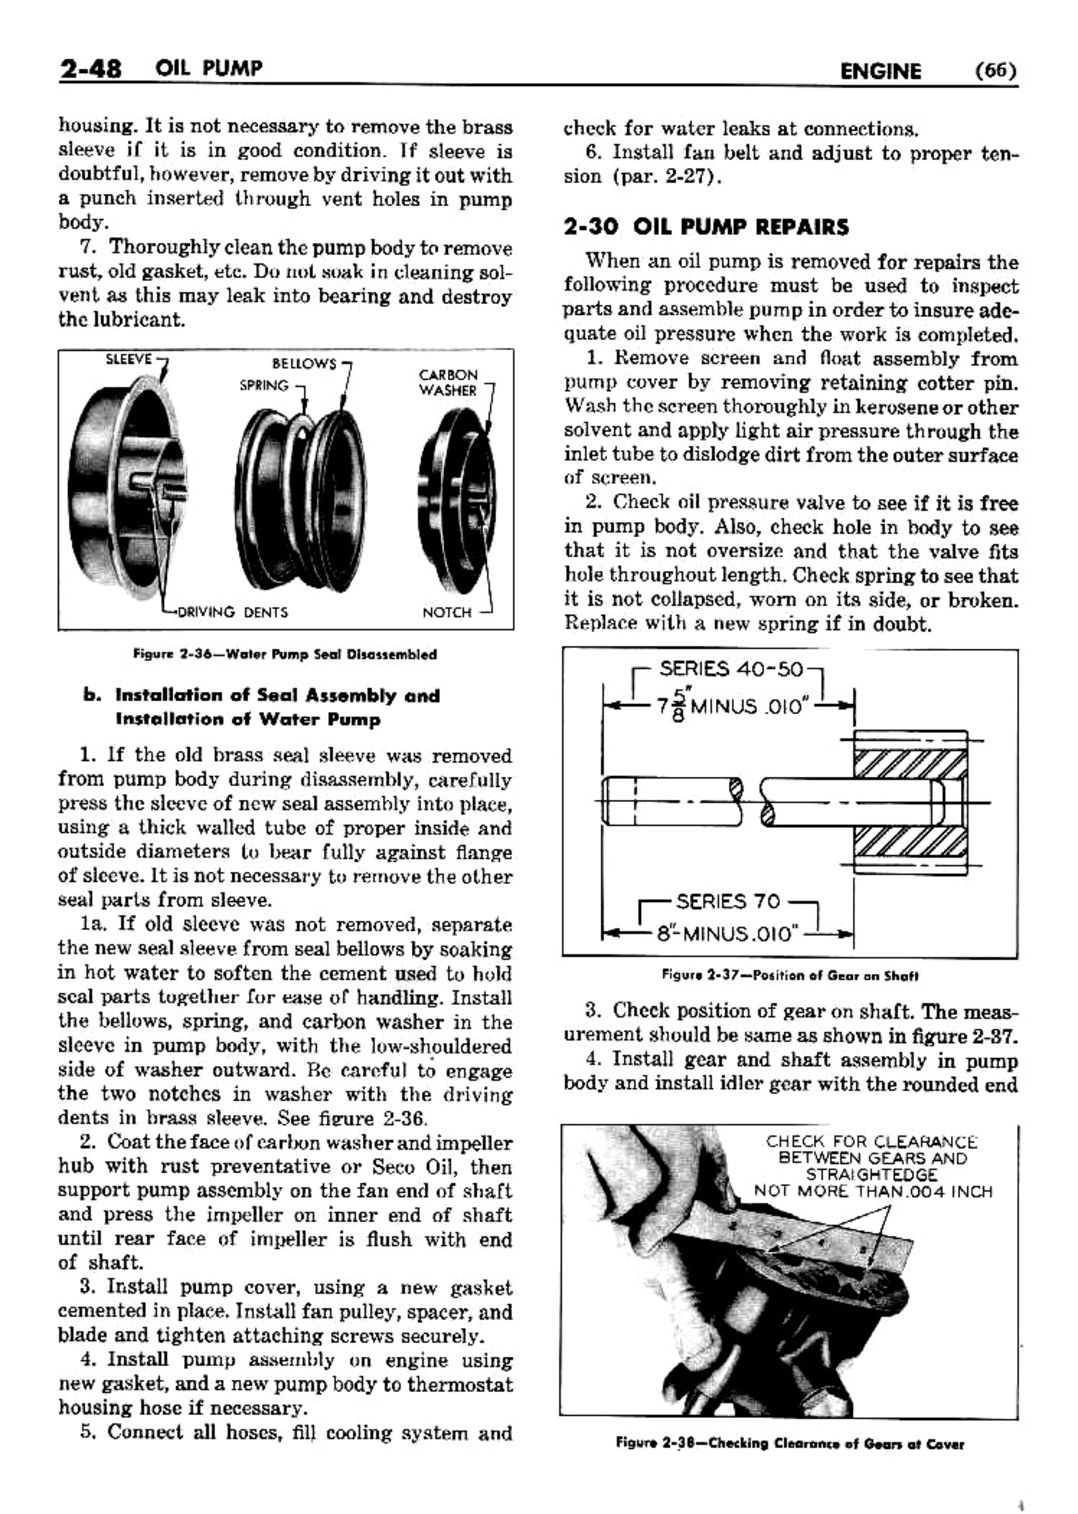 n_03 1952 Buick Shop Manual - Engine-048-048.jpg